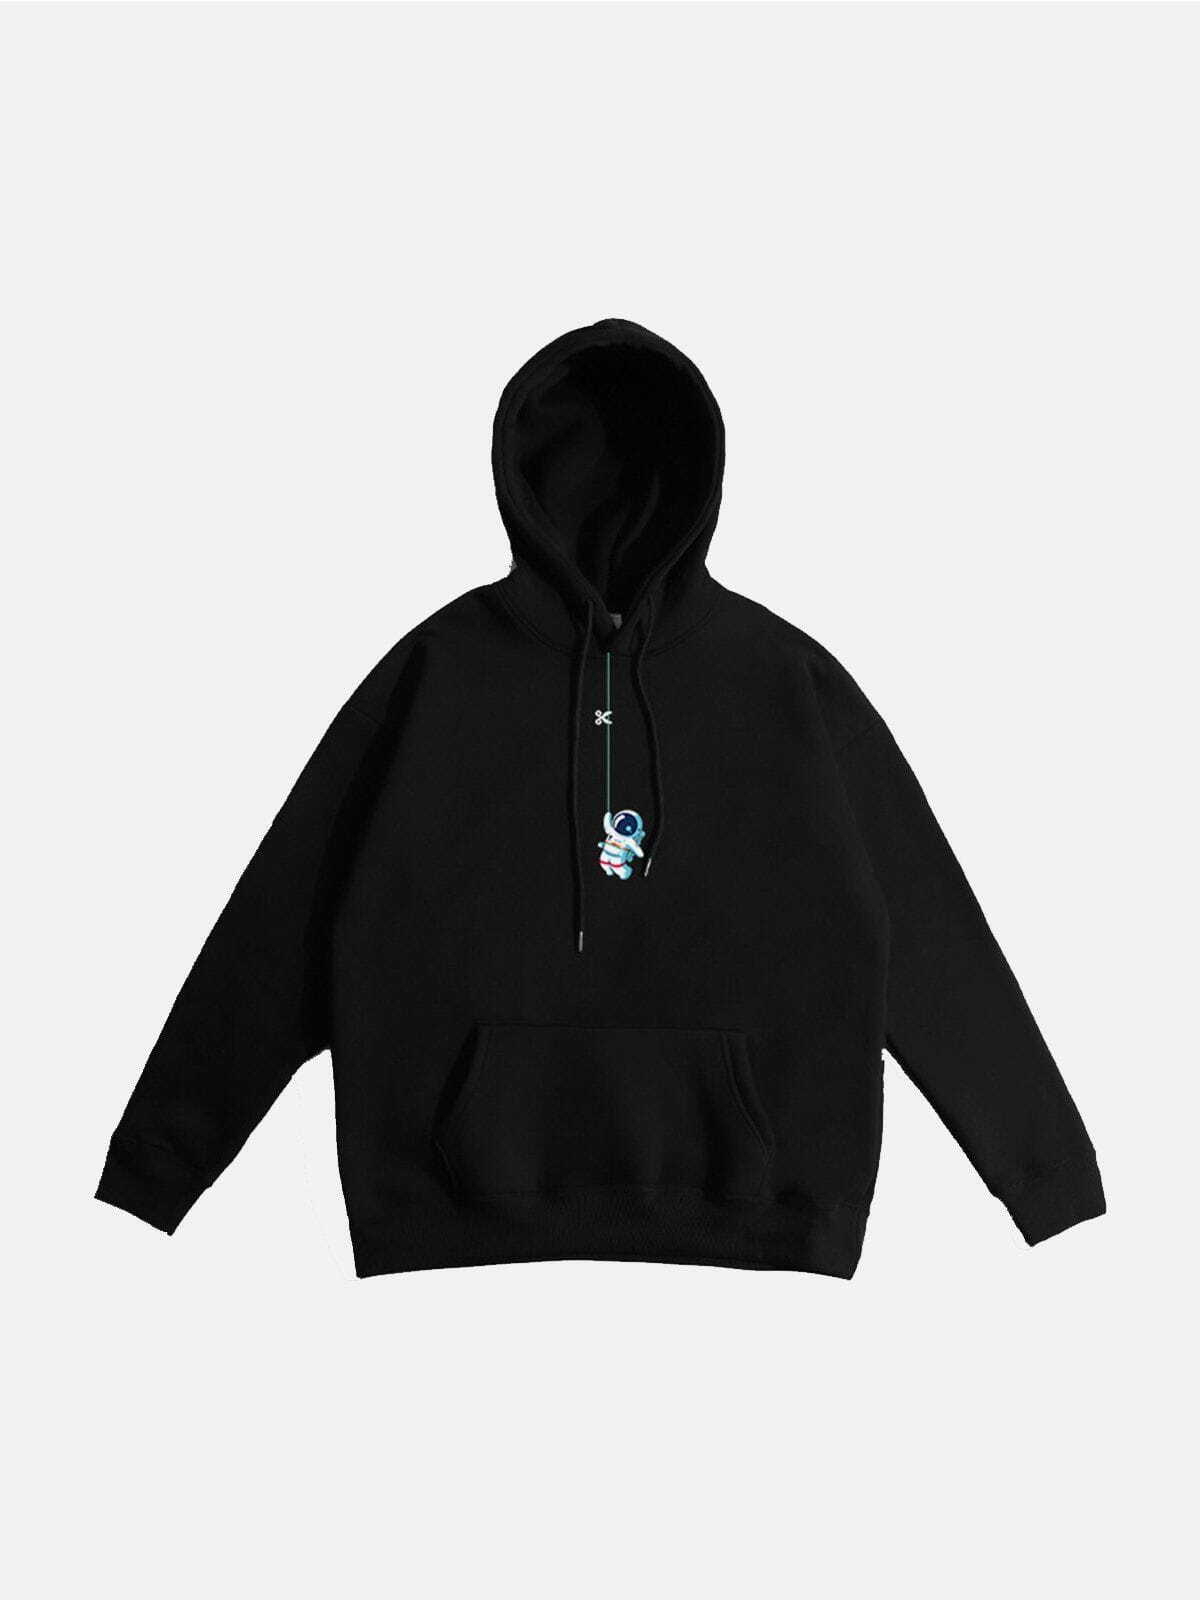 astronaut print fleece hoodie edgy & vibrant streetwear 6533